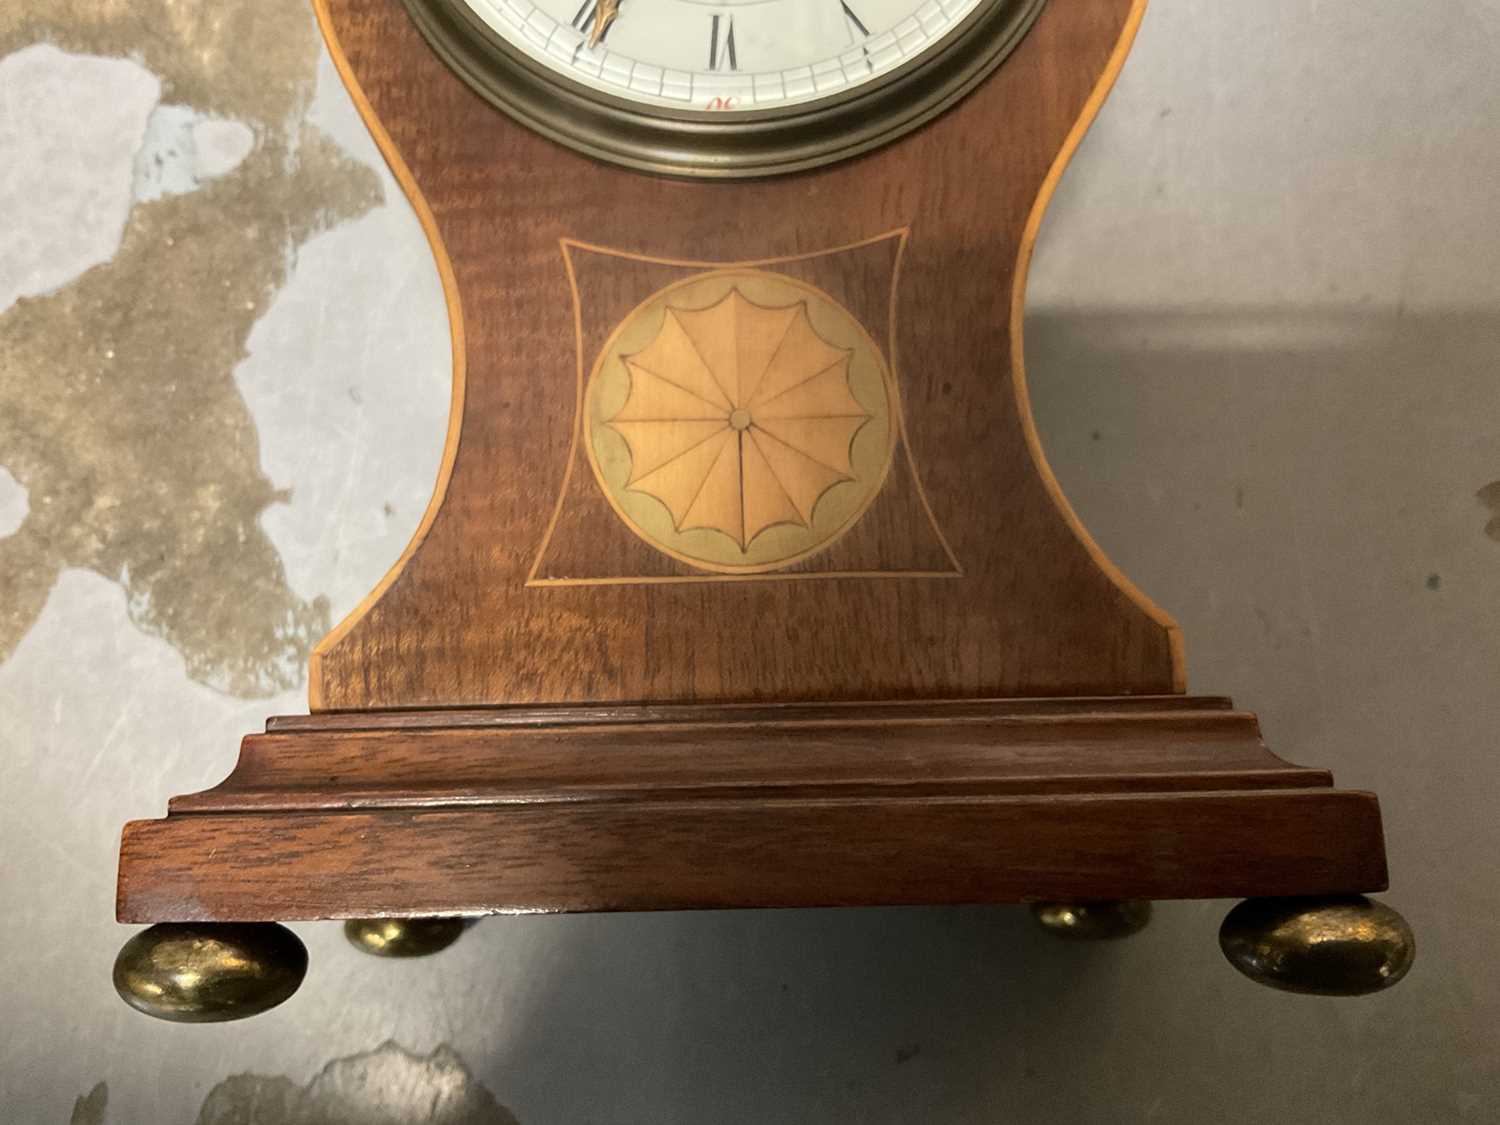 Early 20th century mahogany and inlaid balloon shaped clock - Image 3 of 5